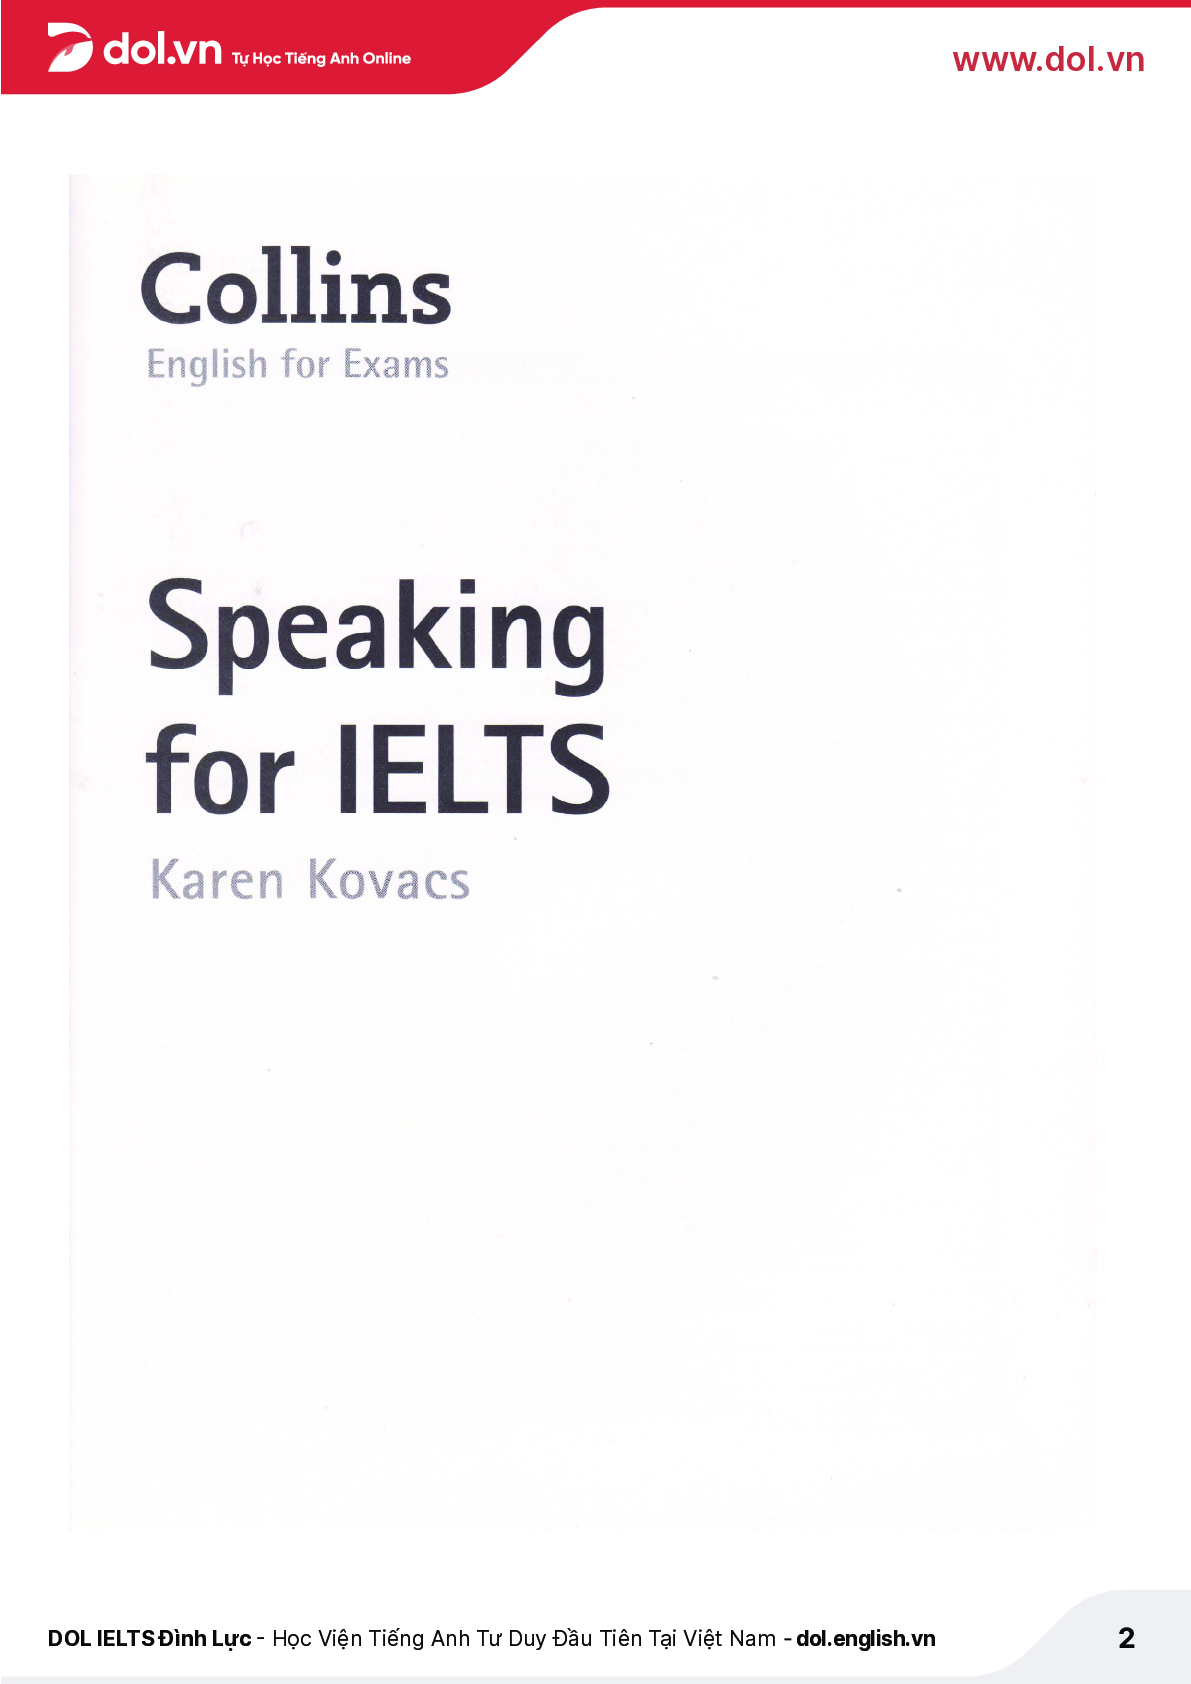 Sách Collins Speaking for IELTS pdf | Xem online, tải PDF miễn phí (trang 2)